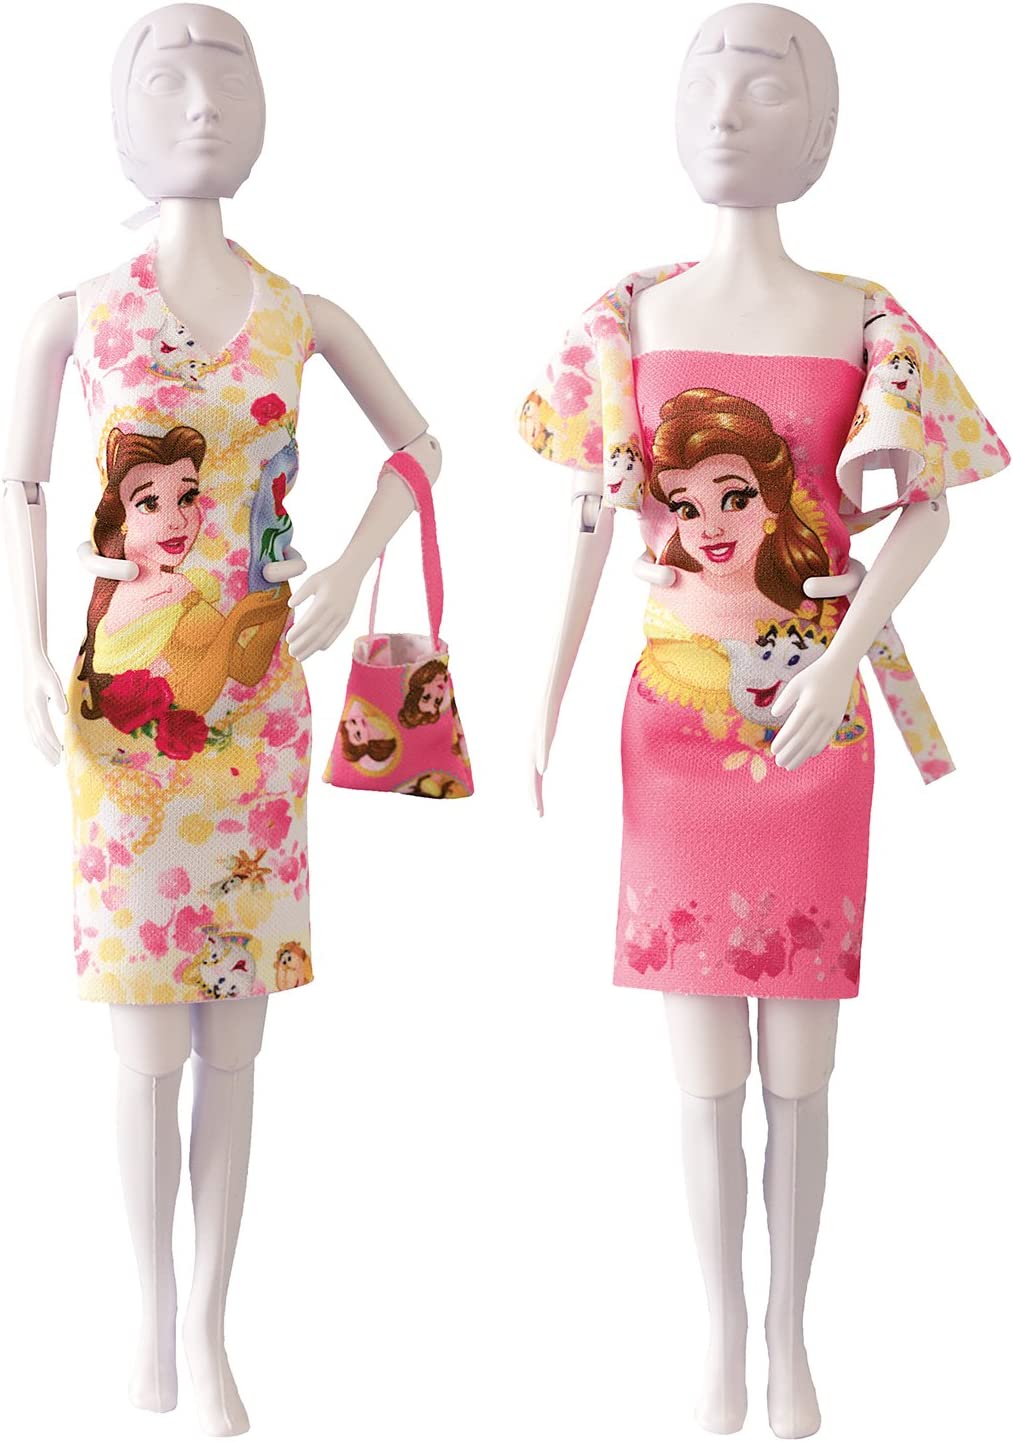 Dress your Doll  Nähe selbst ein Outfit für Deine Mode Puppe!  29cm  Disney Princess  Dolly  Beauty Roses